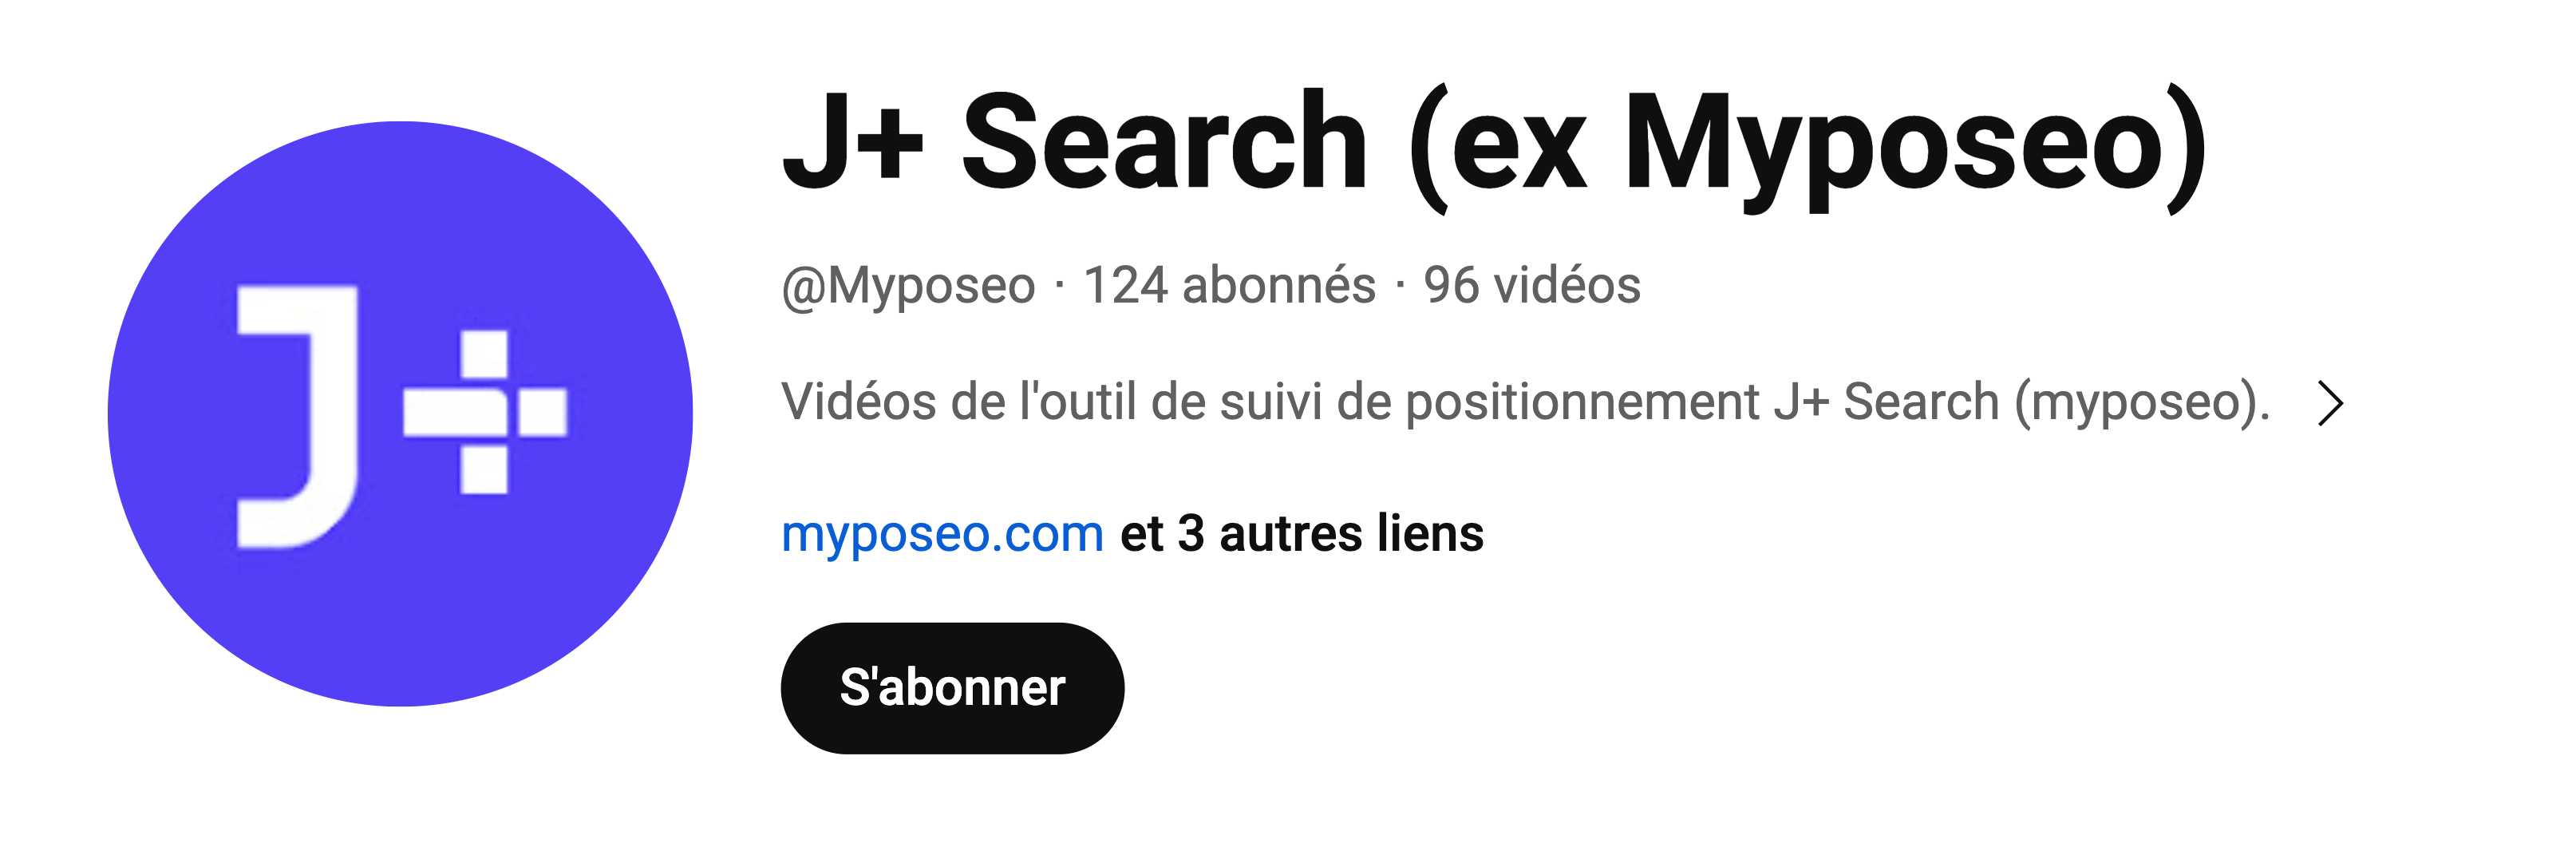 J+ Search (ex Myposeo)